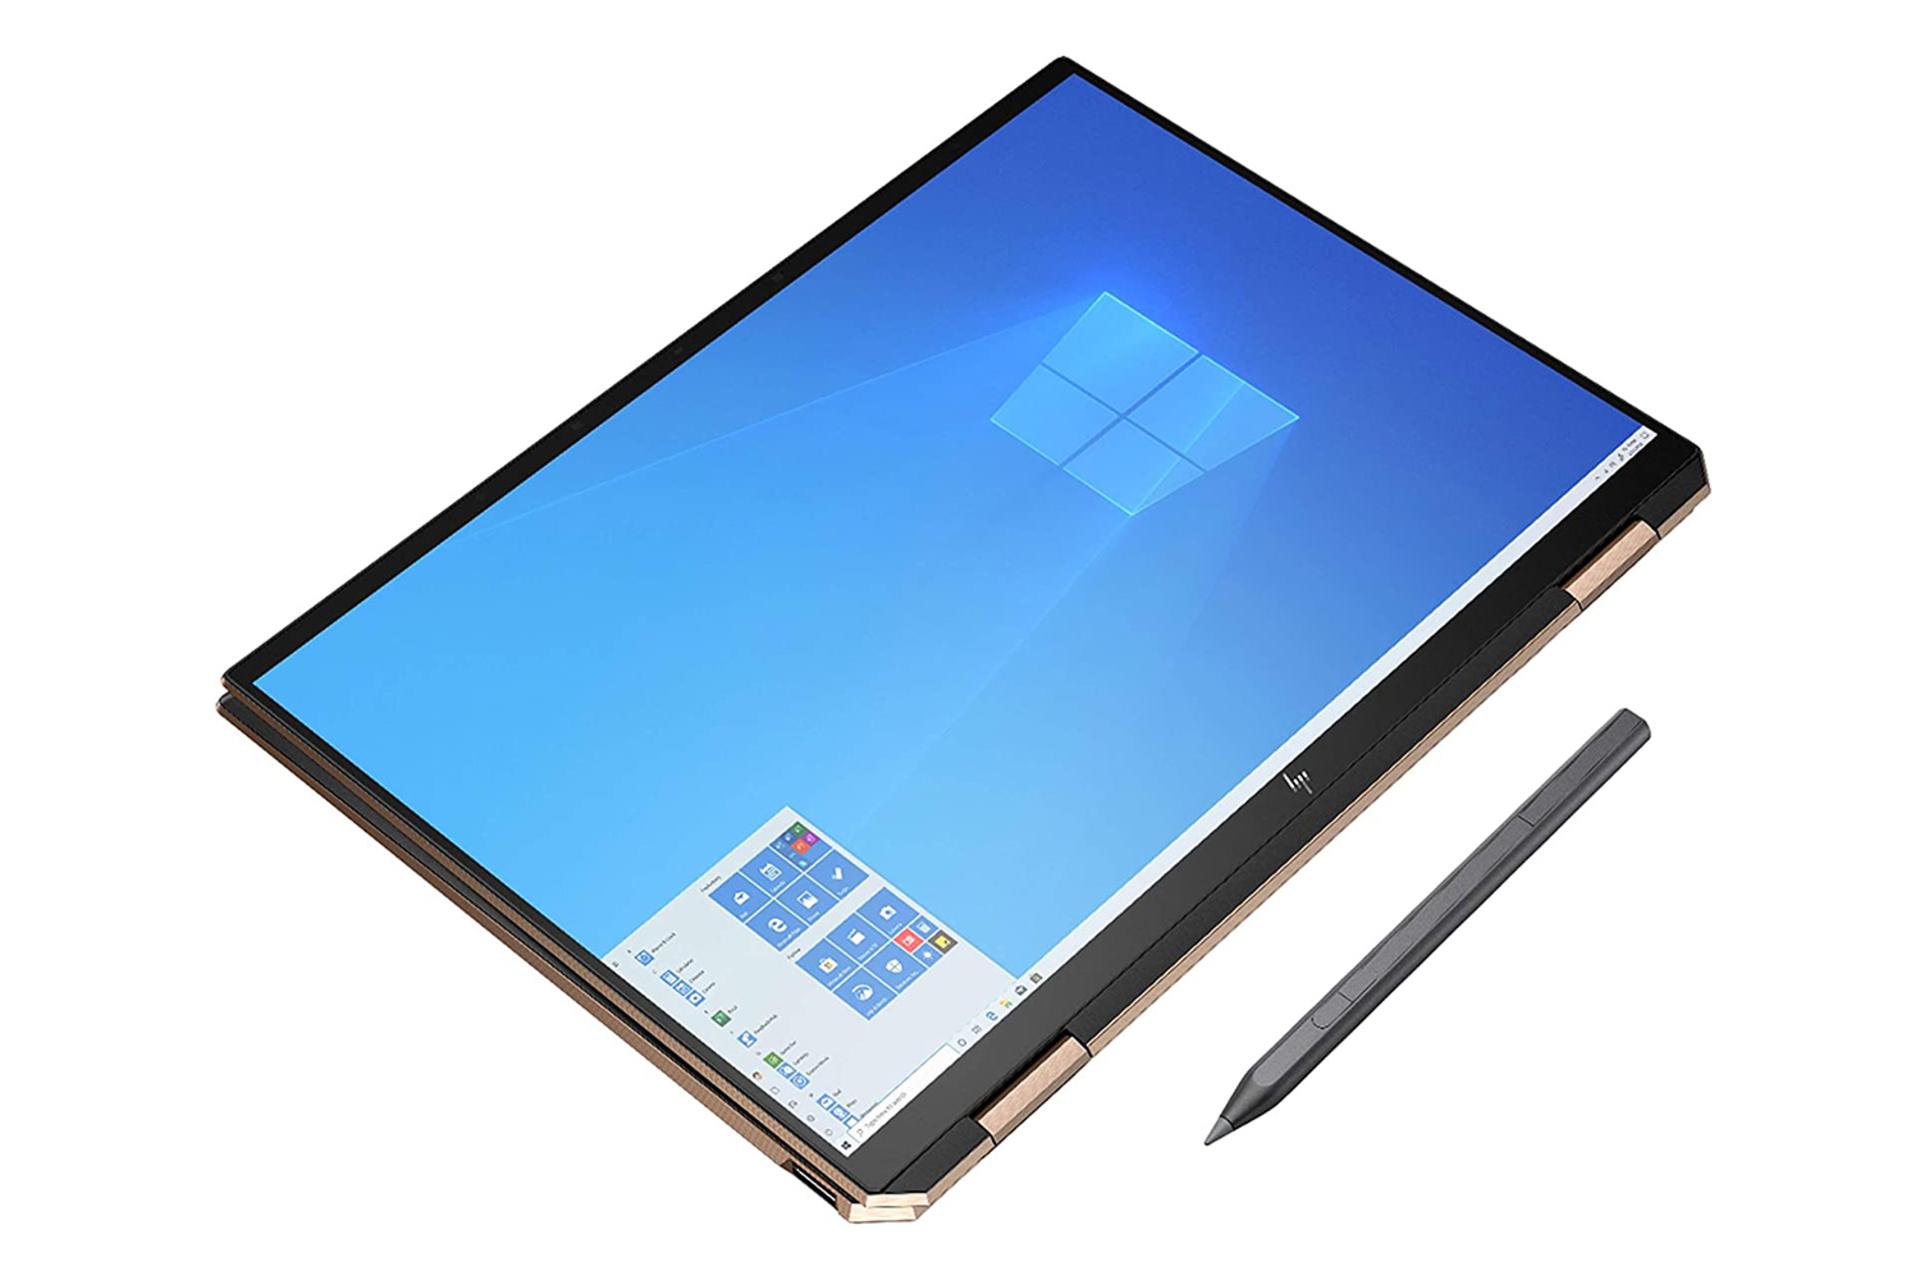 لپ تاپ اچ پی اسپکتر X360 Convertible 14t-ea000 در حالت تبلت در کنار قلم لمسی